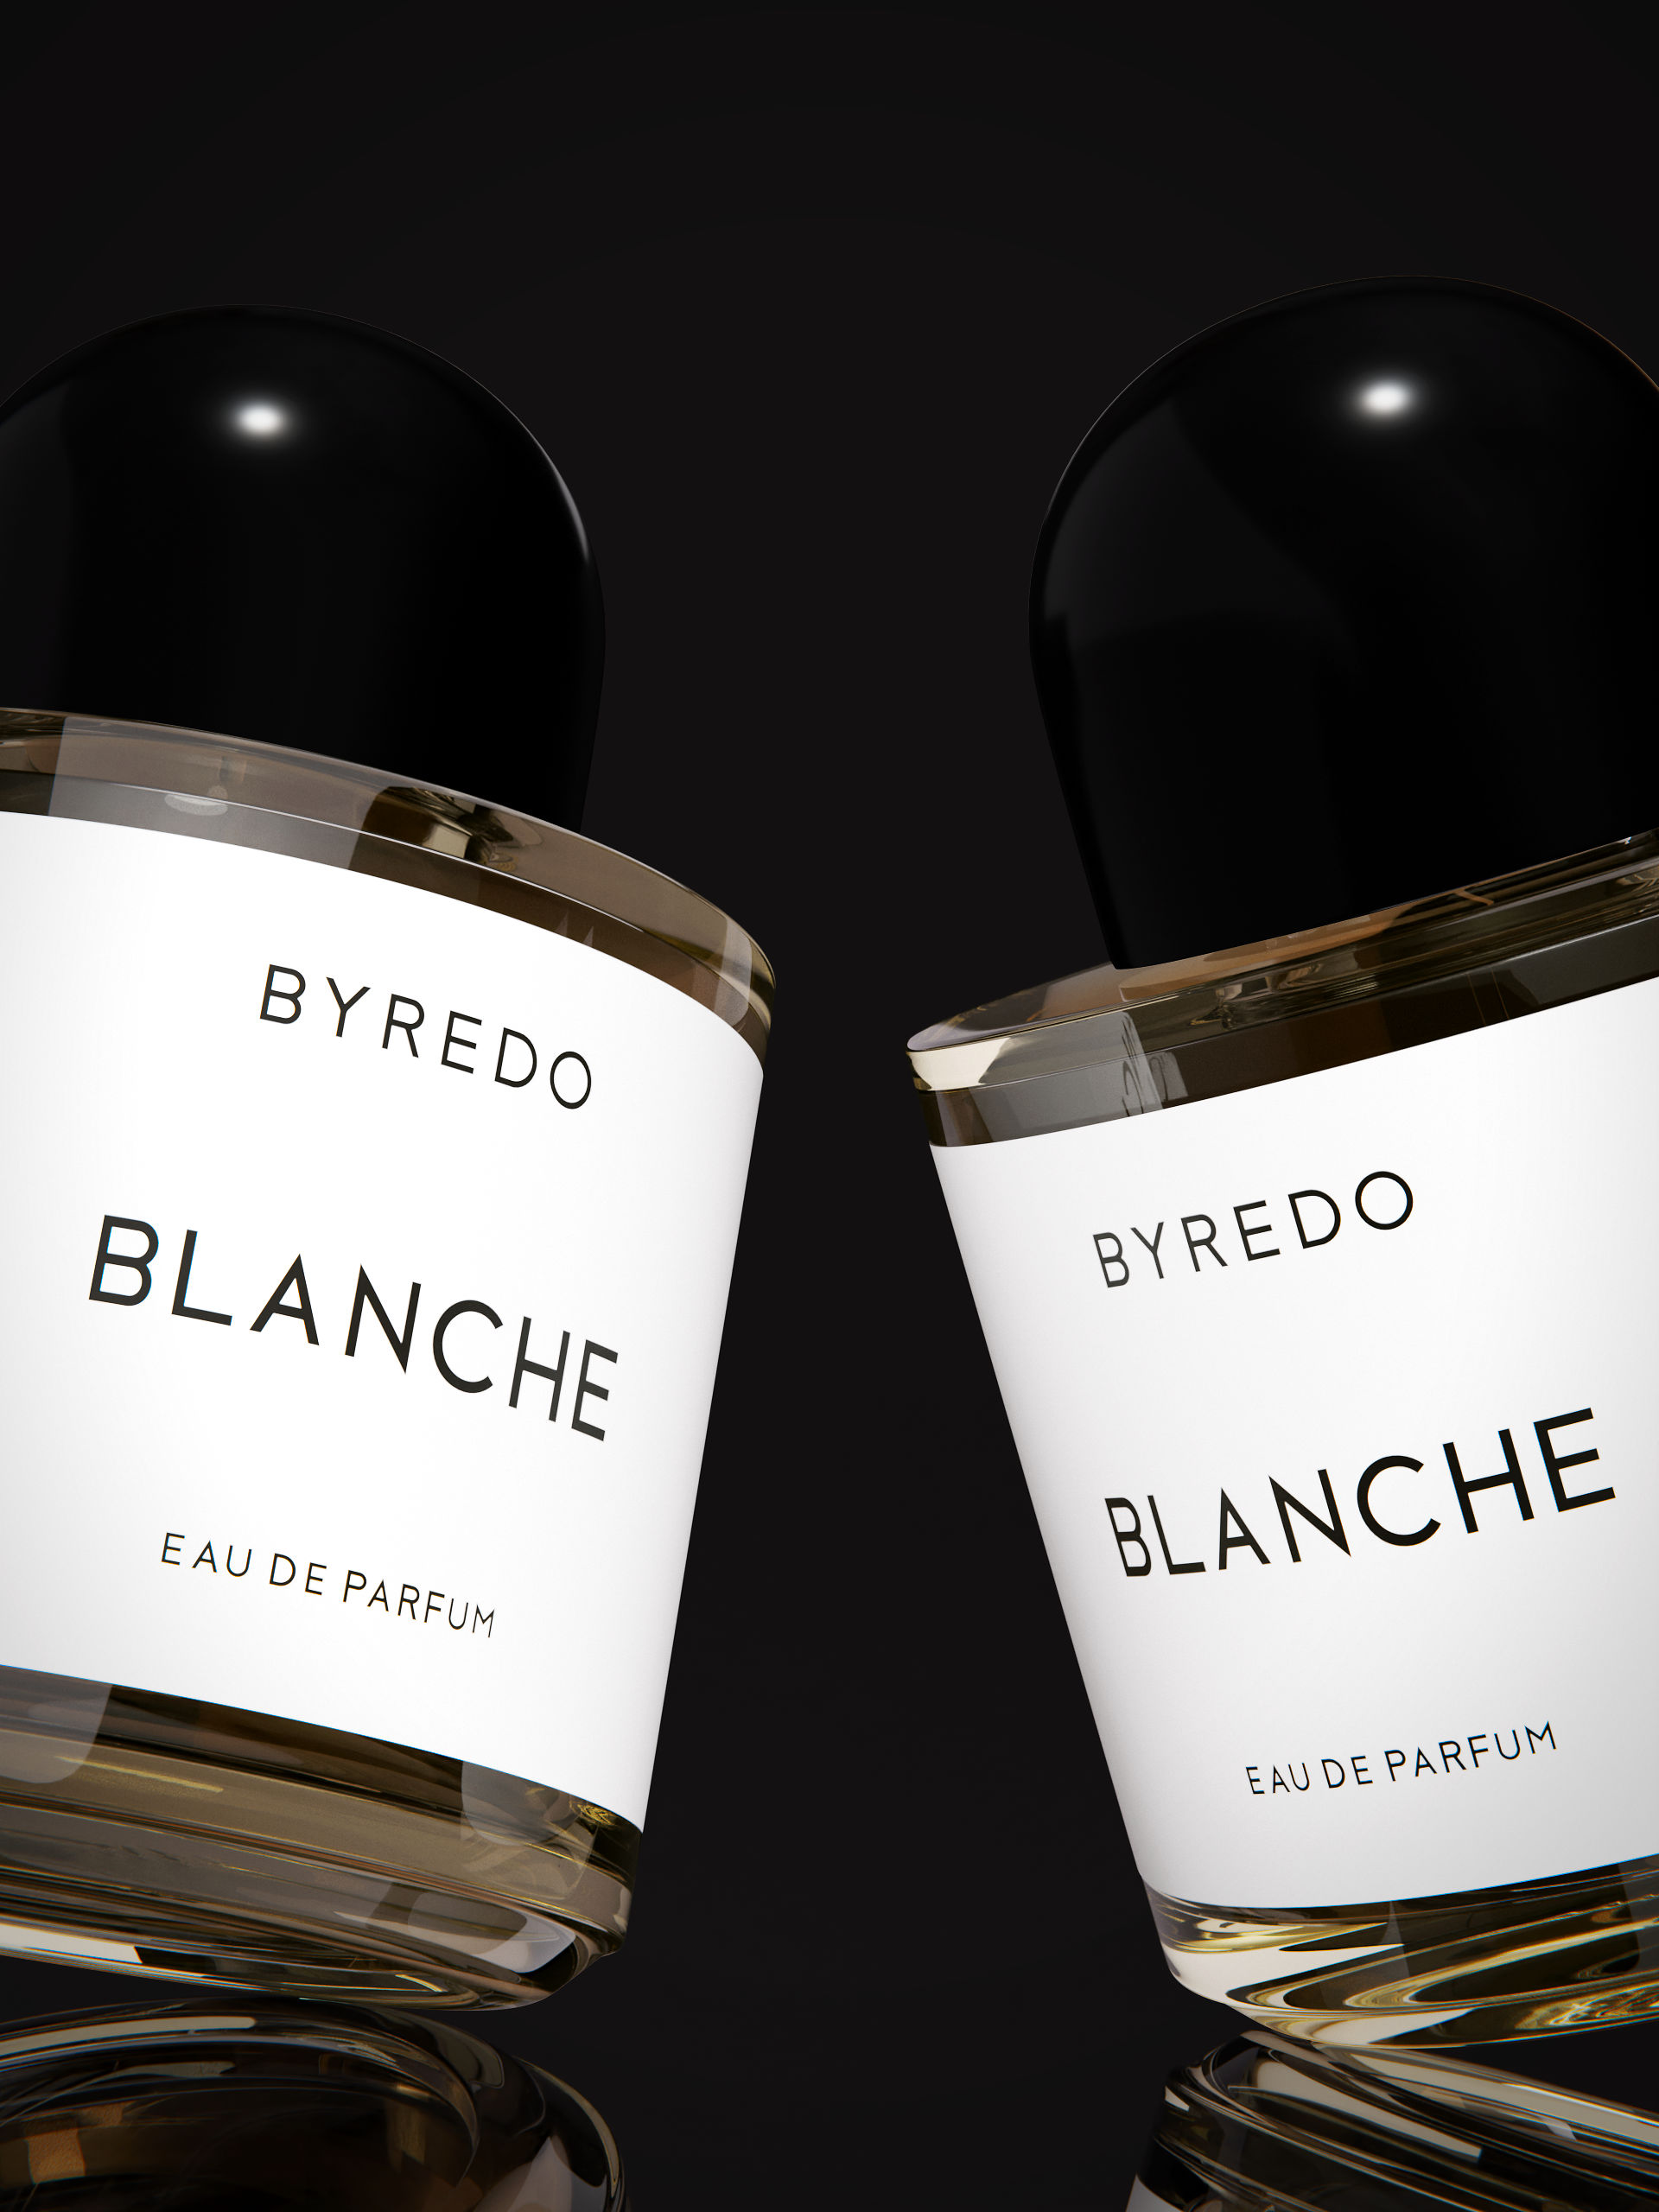 8 Byredo Blanche V3 - Byredo Blanche Eau De Parfum CGI - Sonny Nguyen